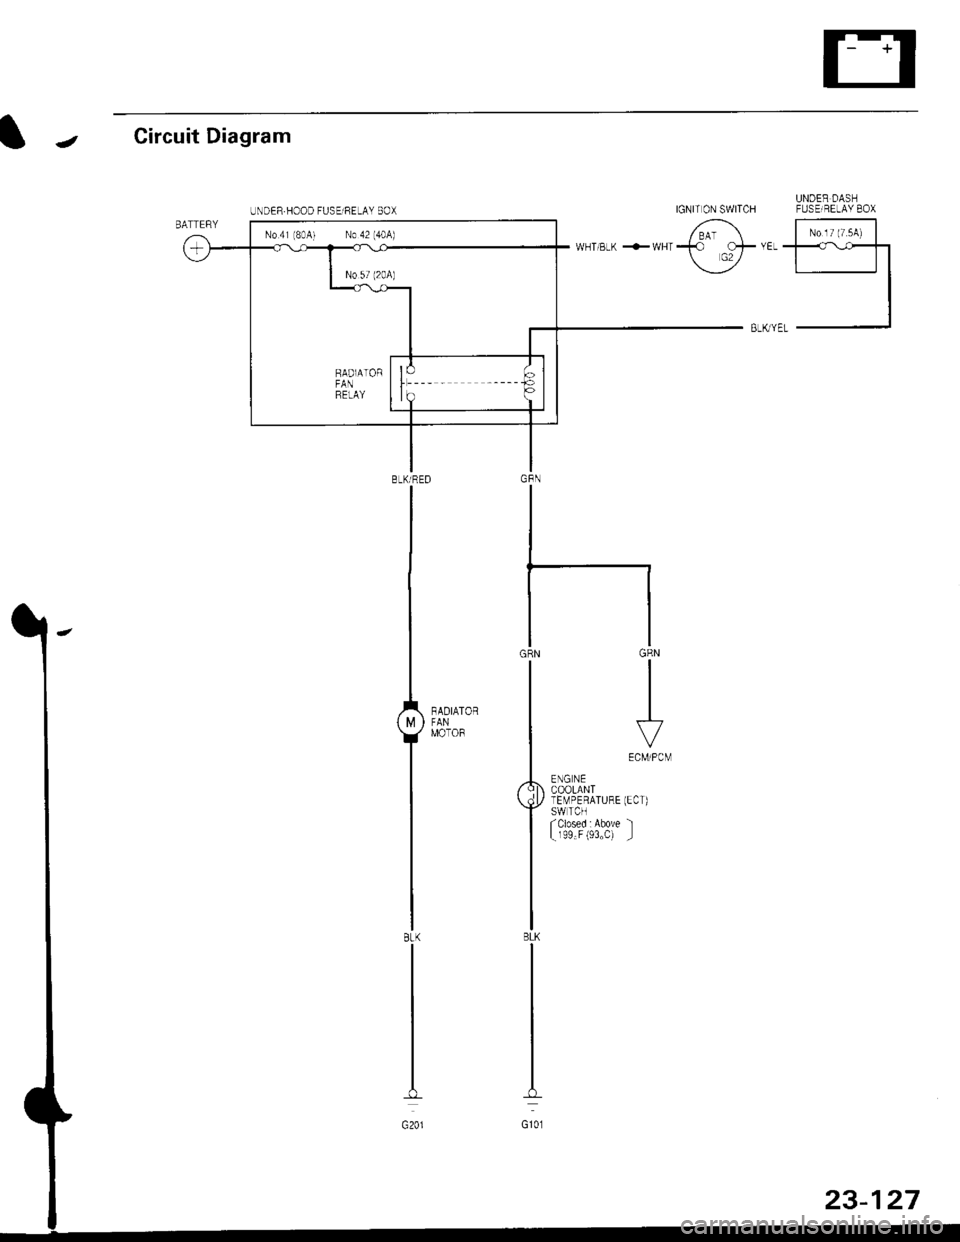 HONDA CIVIC 2000 6.G Workshop Manual IJCircuit Diagram
UNDER DASHIGNIT ON SWITCH FUSEIRELAY 8OX
6 |-;;;;lii "ir"t*Tl-l
BLK yEL -J
GRN
III
I
\.7VECM/PCM
ENG NECOOLANTlEMPERATURE (ECT)SWTCHfclosed : Above l
L r99"F (93"C) _l
BLKTRED
I
I
